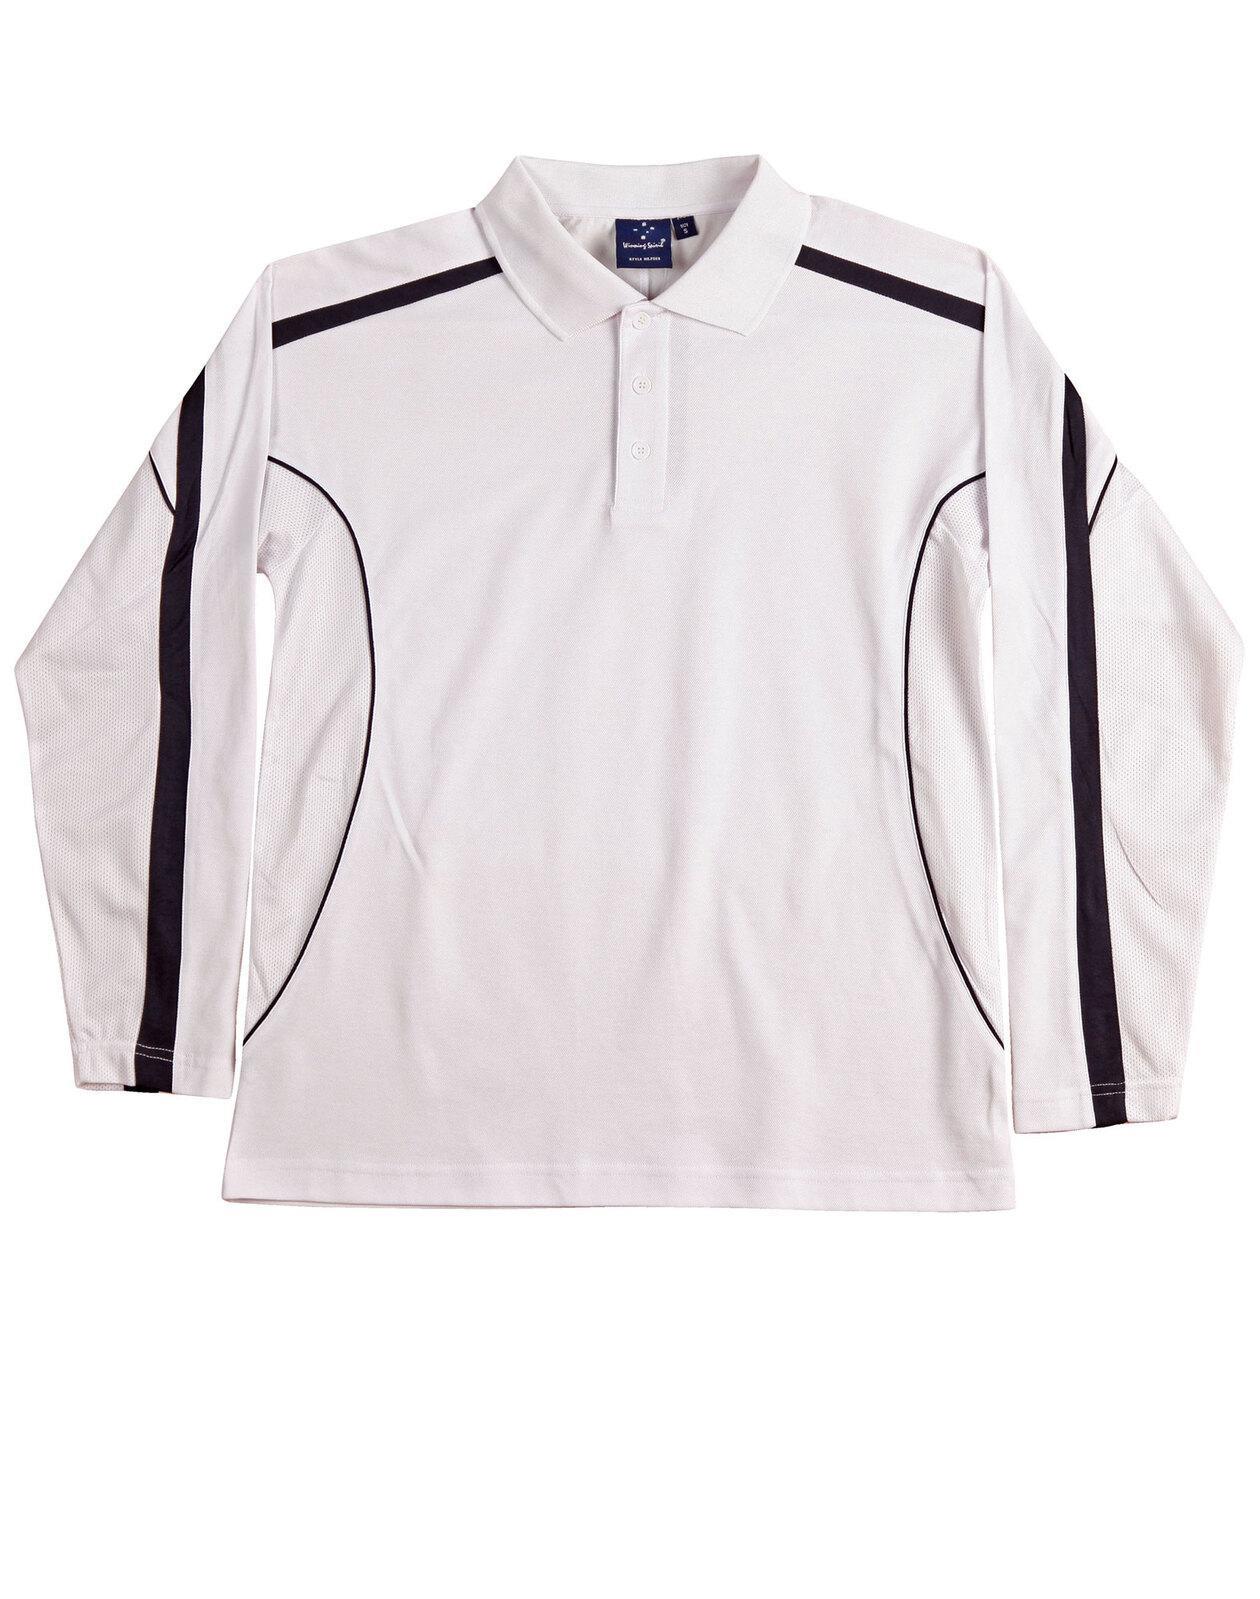 PS69 Sz 2XL Easy Fit LEGEND PLUS Polyester Men's Polo Shirt White/Navy